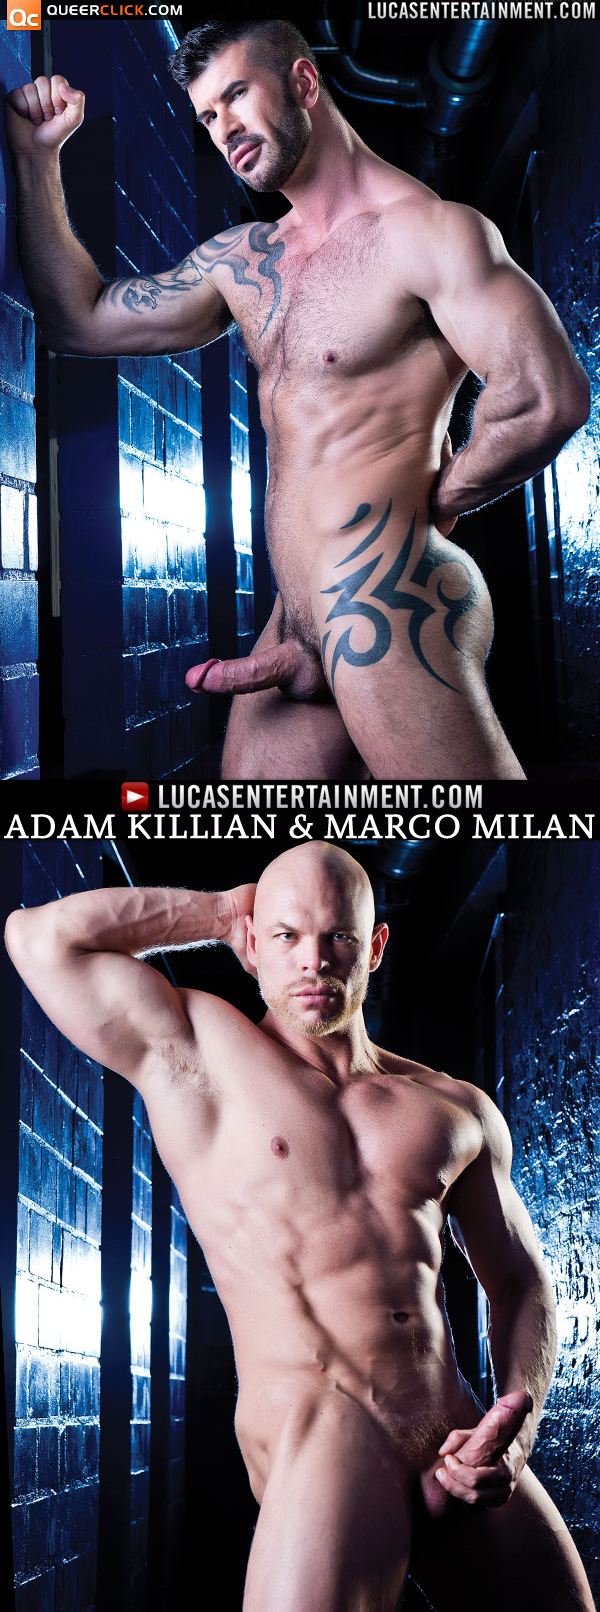 Lucas Entertainment: Adam Killian & Marco Milan